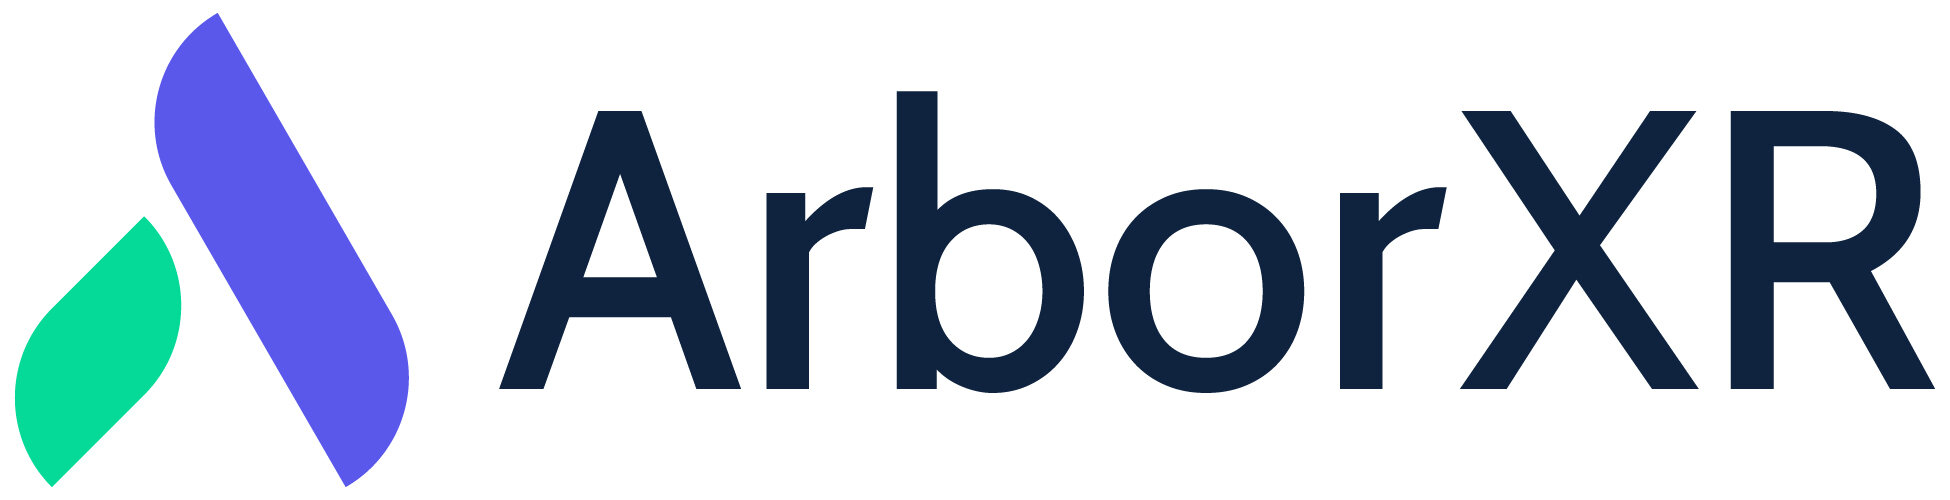 ArborXR-logo.jpg